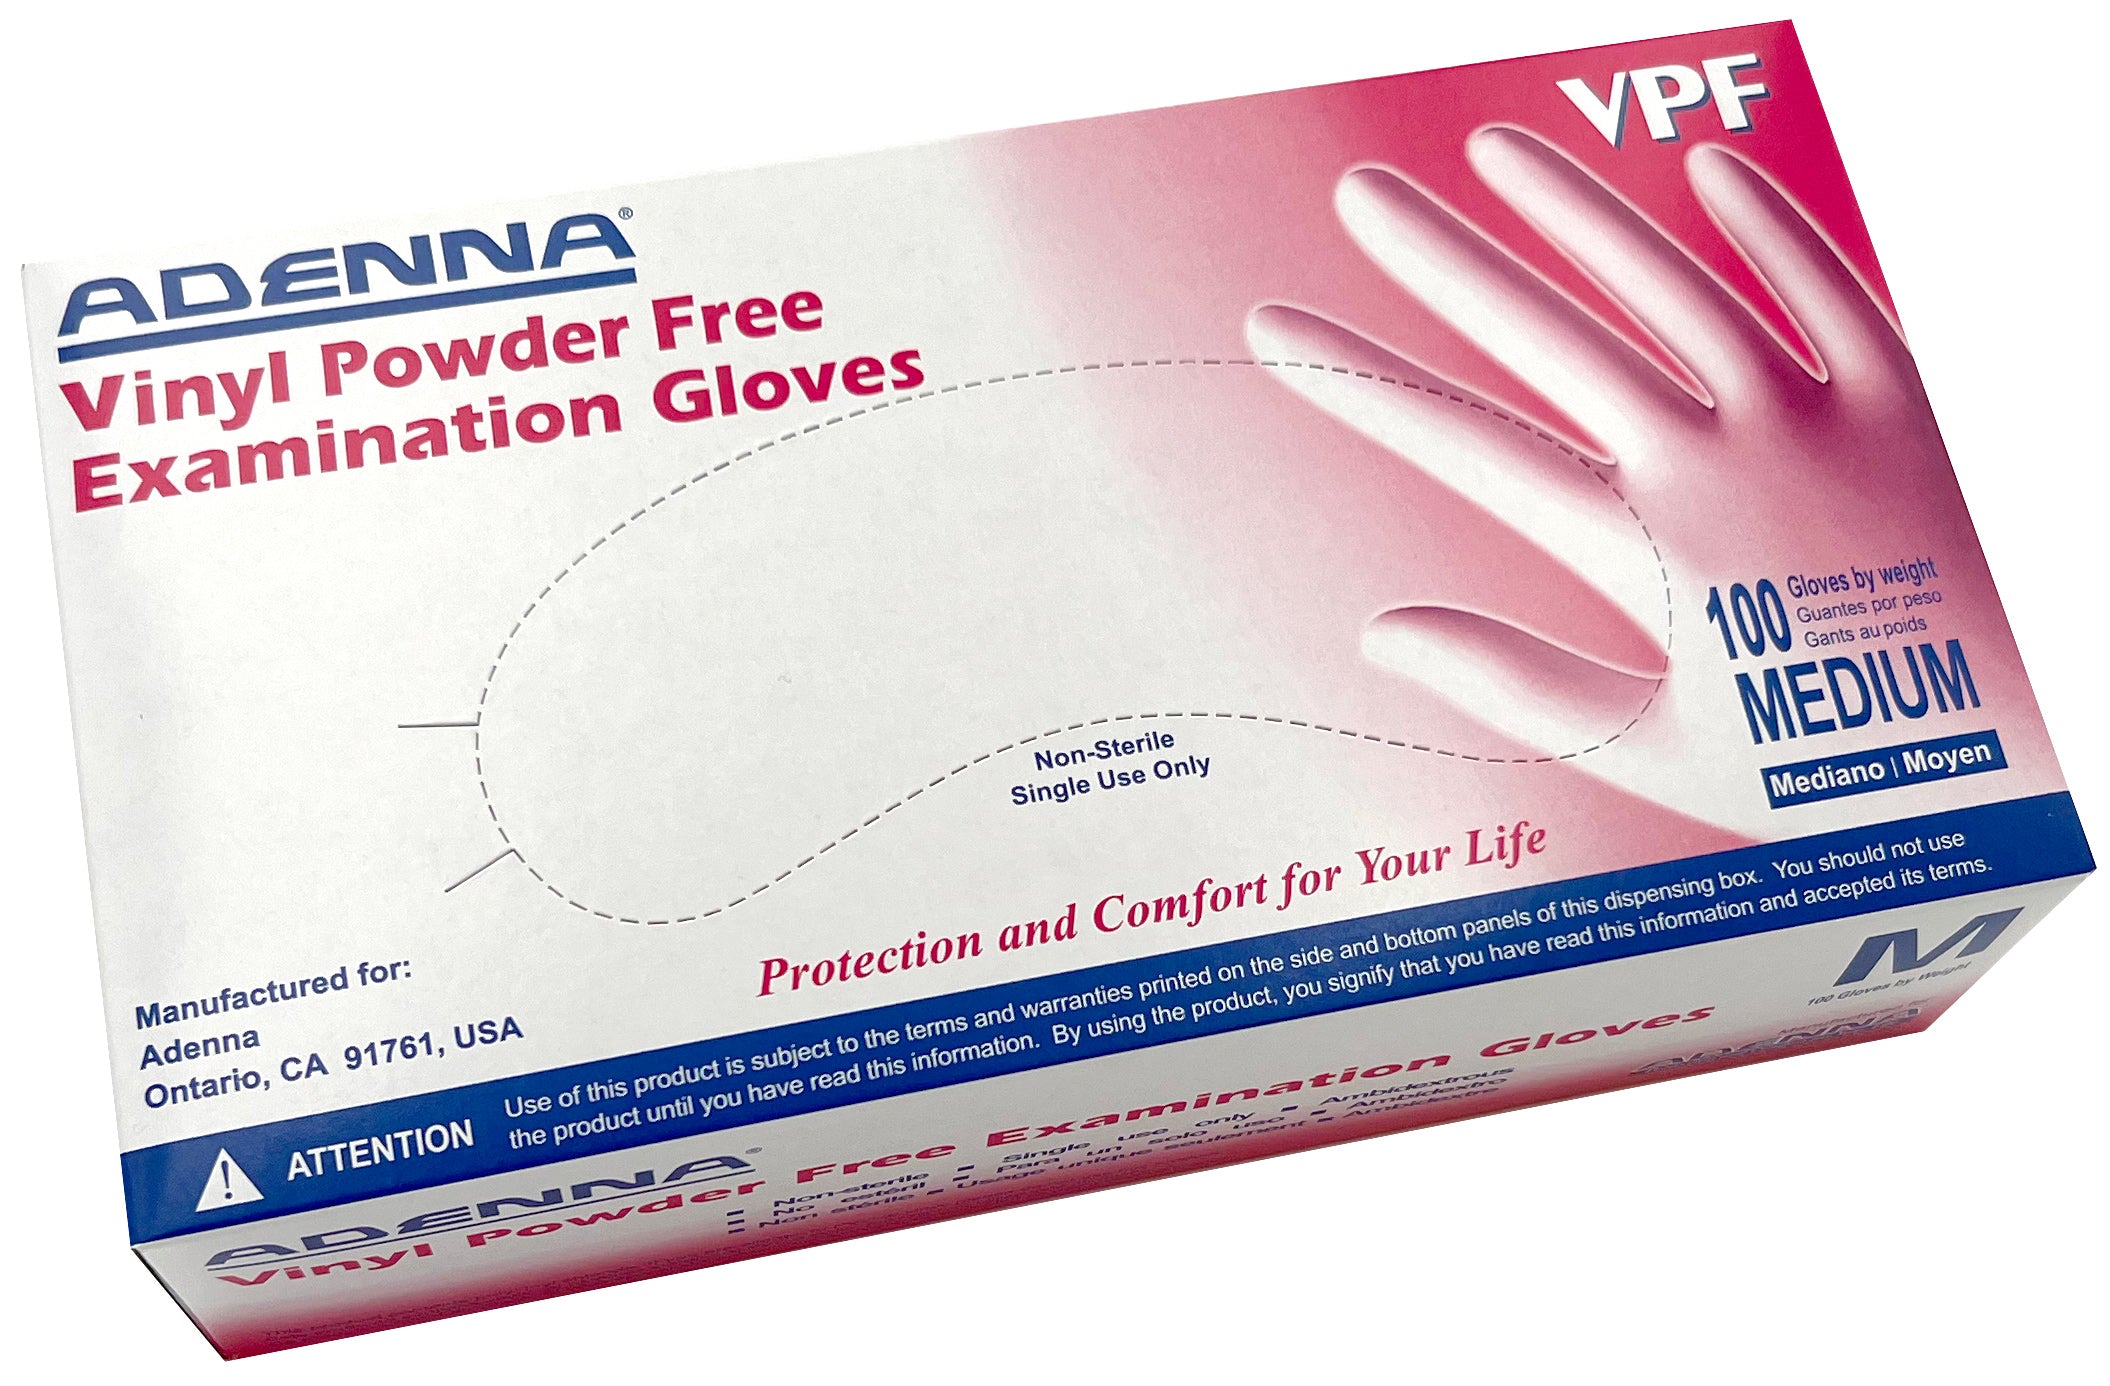 Adenna Vinyl Powder Free Examiniation Gloves